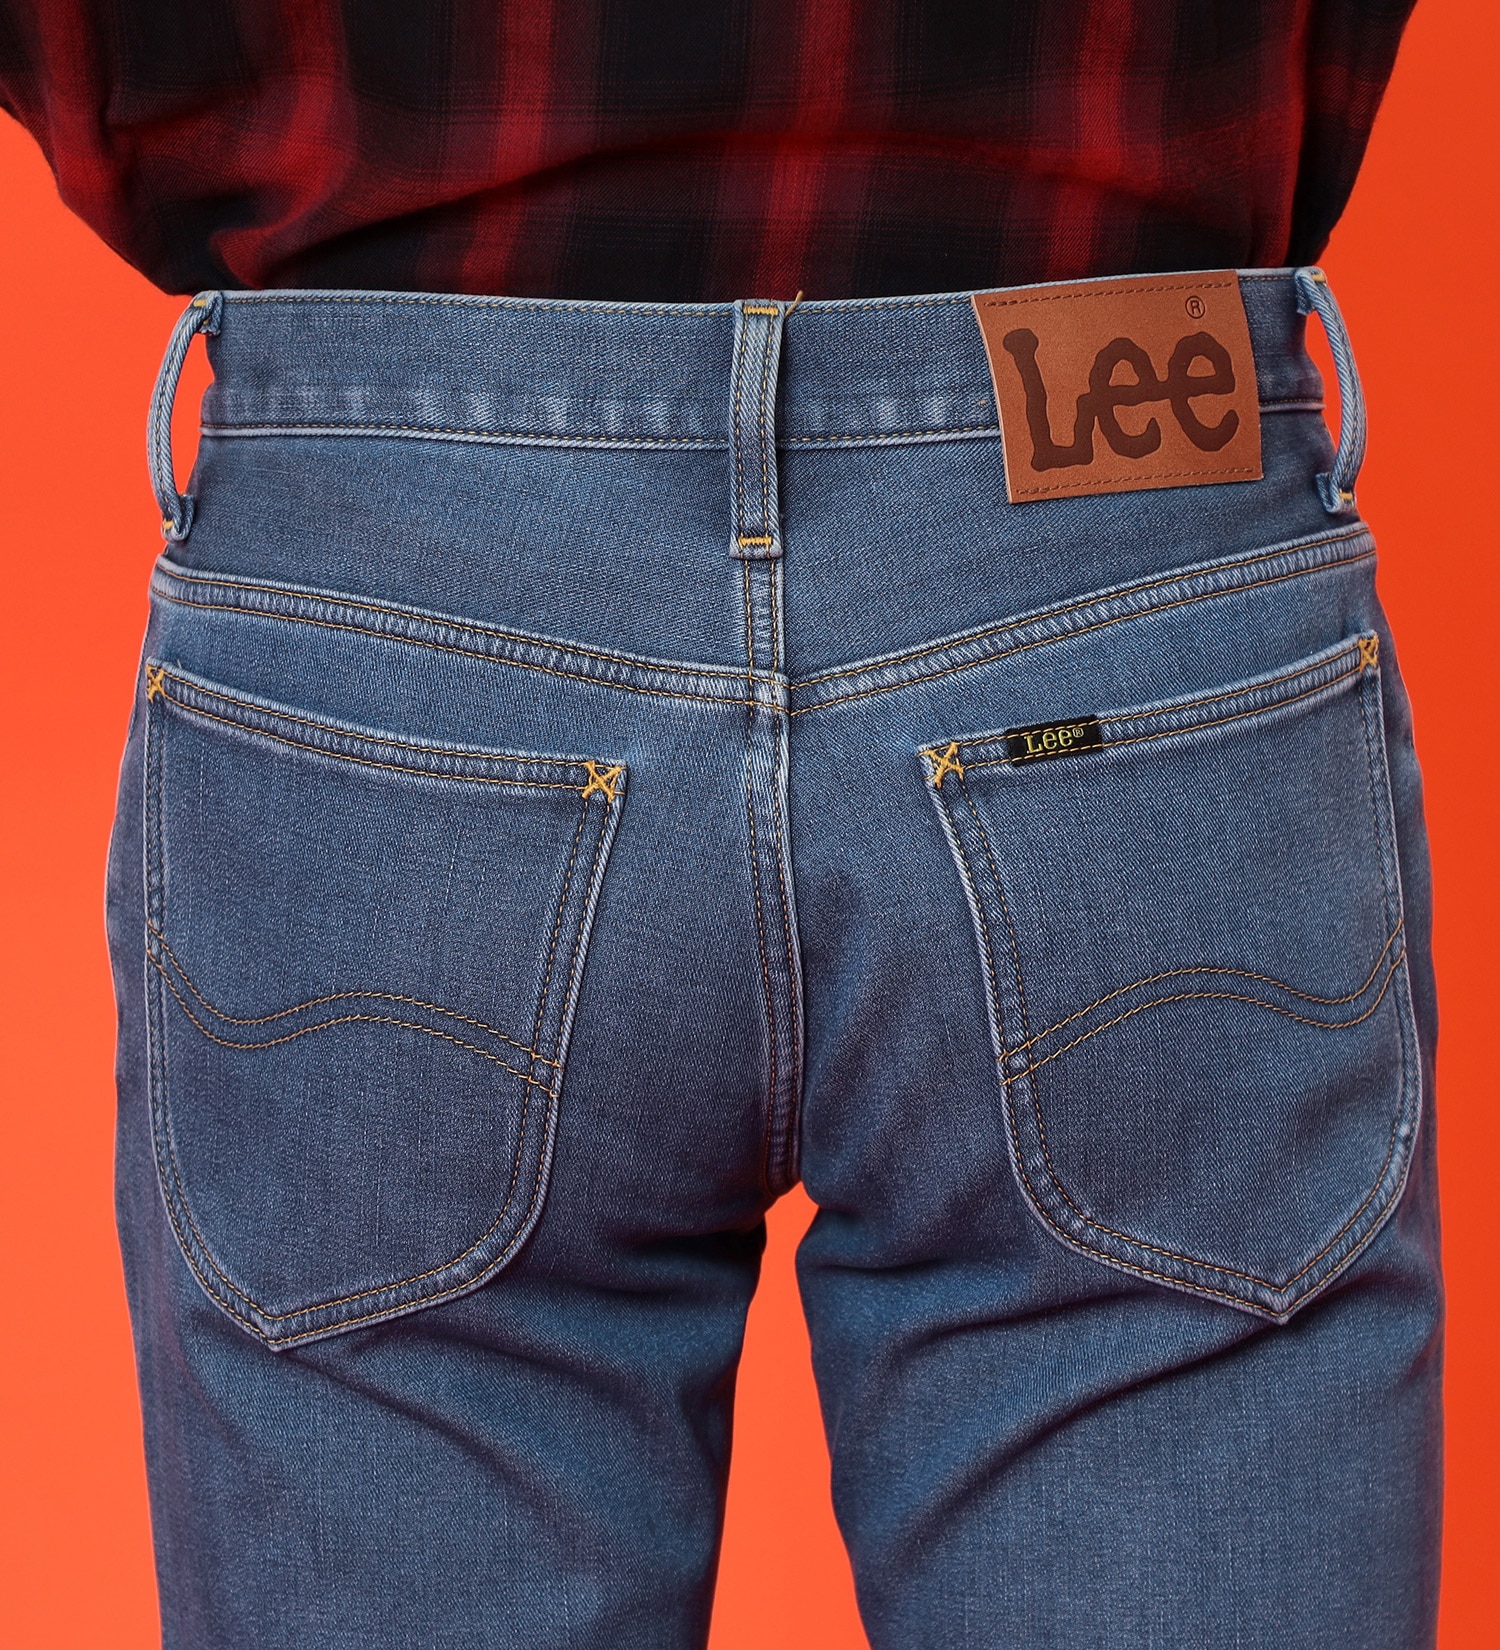 Lee(リー)の【先行SALE】【3,000円OFF】【裏起毛】AMERICAN STANDARD 102 ブーツカット【暖】|パンツ/デニムパンツ/メンズ|中色ブルー